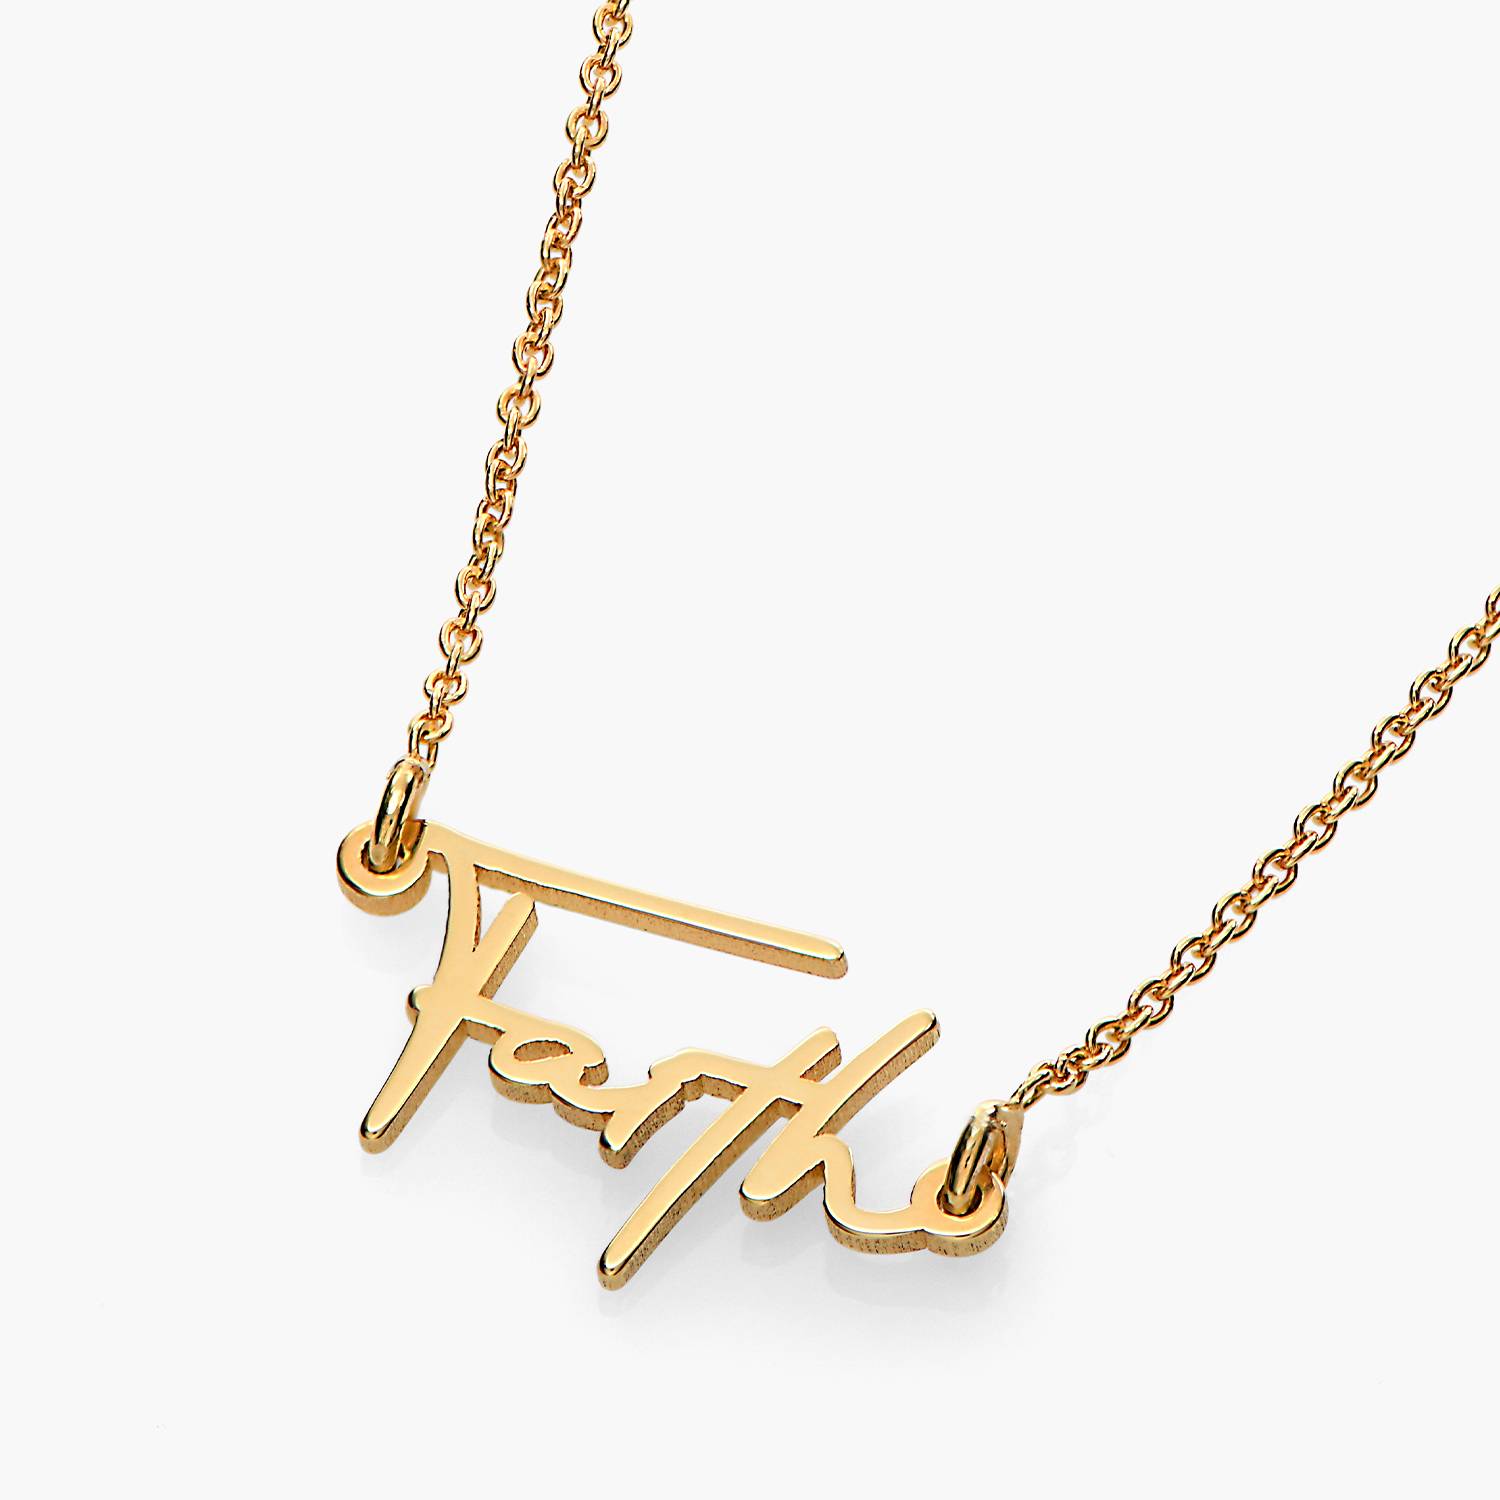 Paris Name Necklace in 18k Gold Vermeil-1 product photo